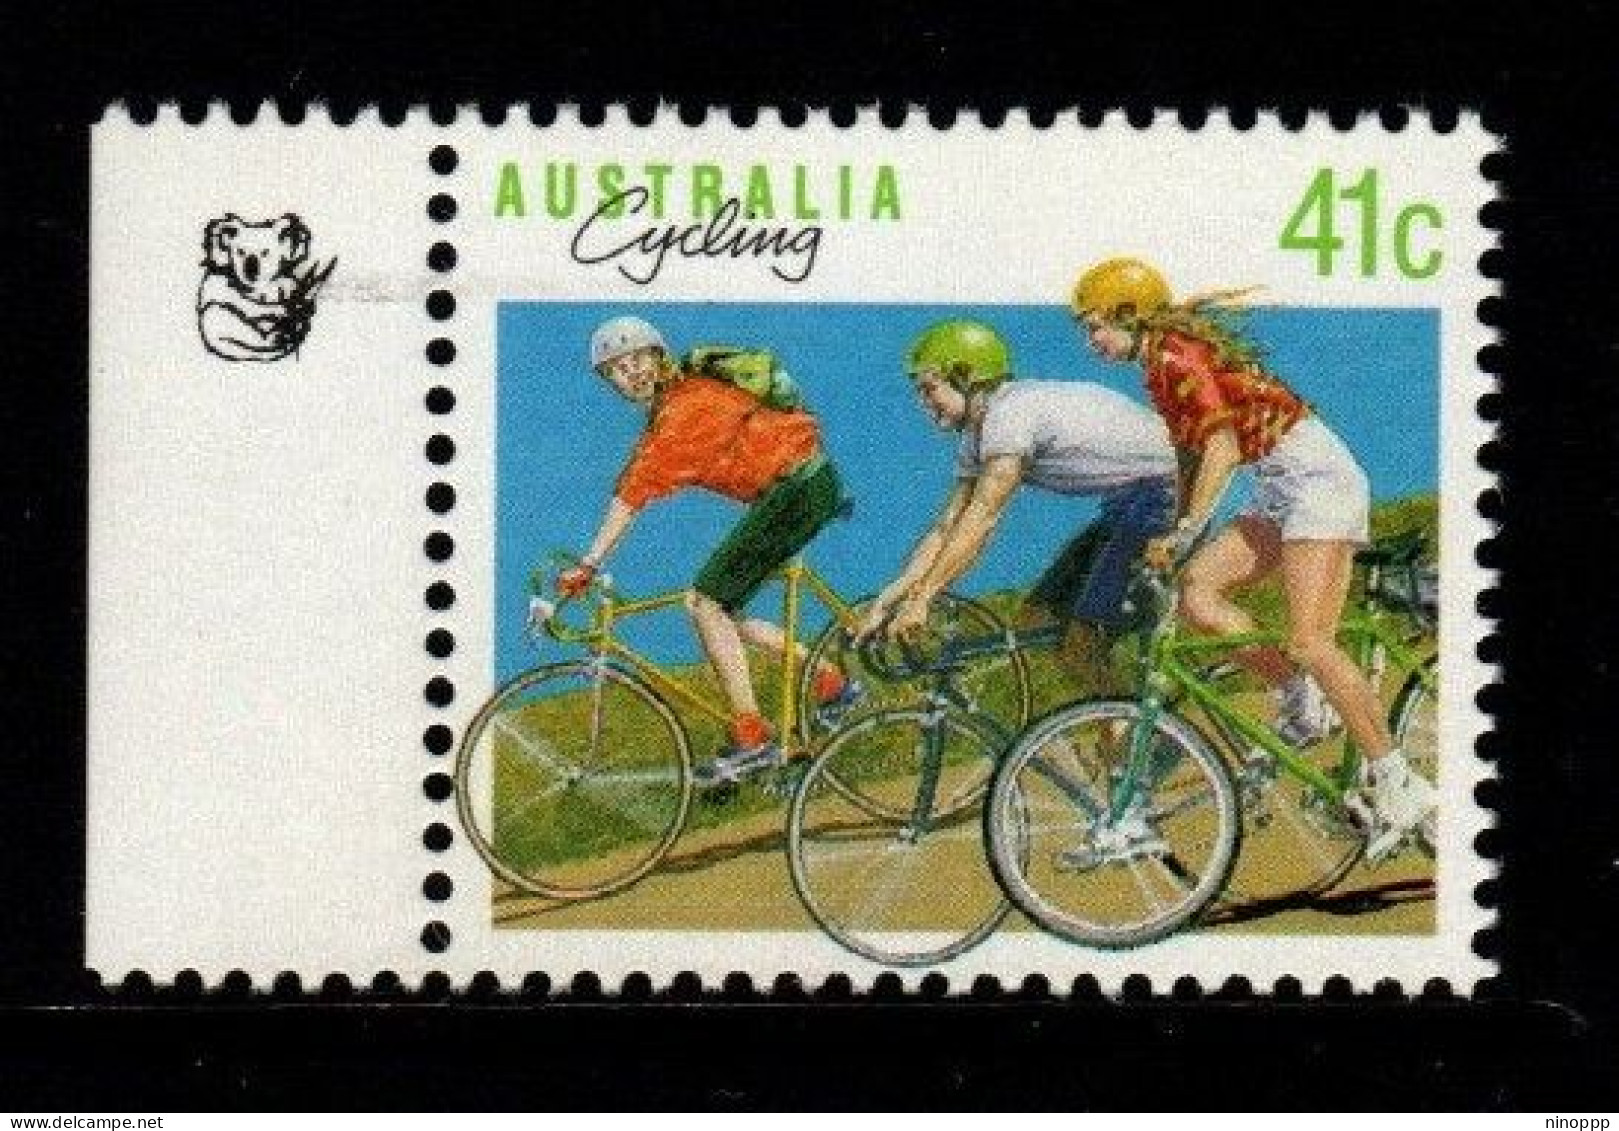 Australia Cat 1208b  Sports 41c Cycling, 1 Koalas Reprint,mint Never Hinged - Essais & Réimpressions